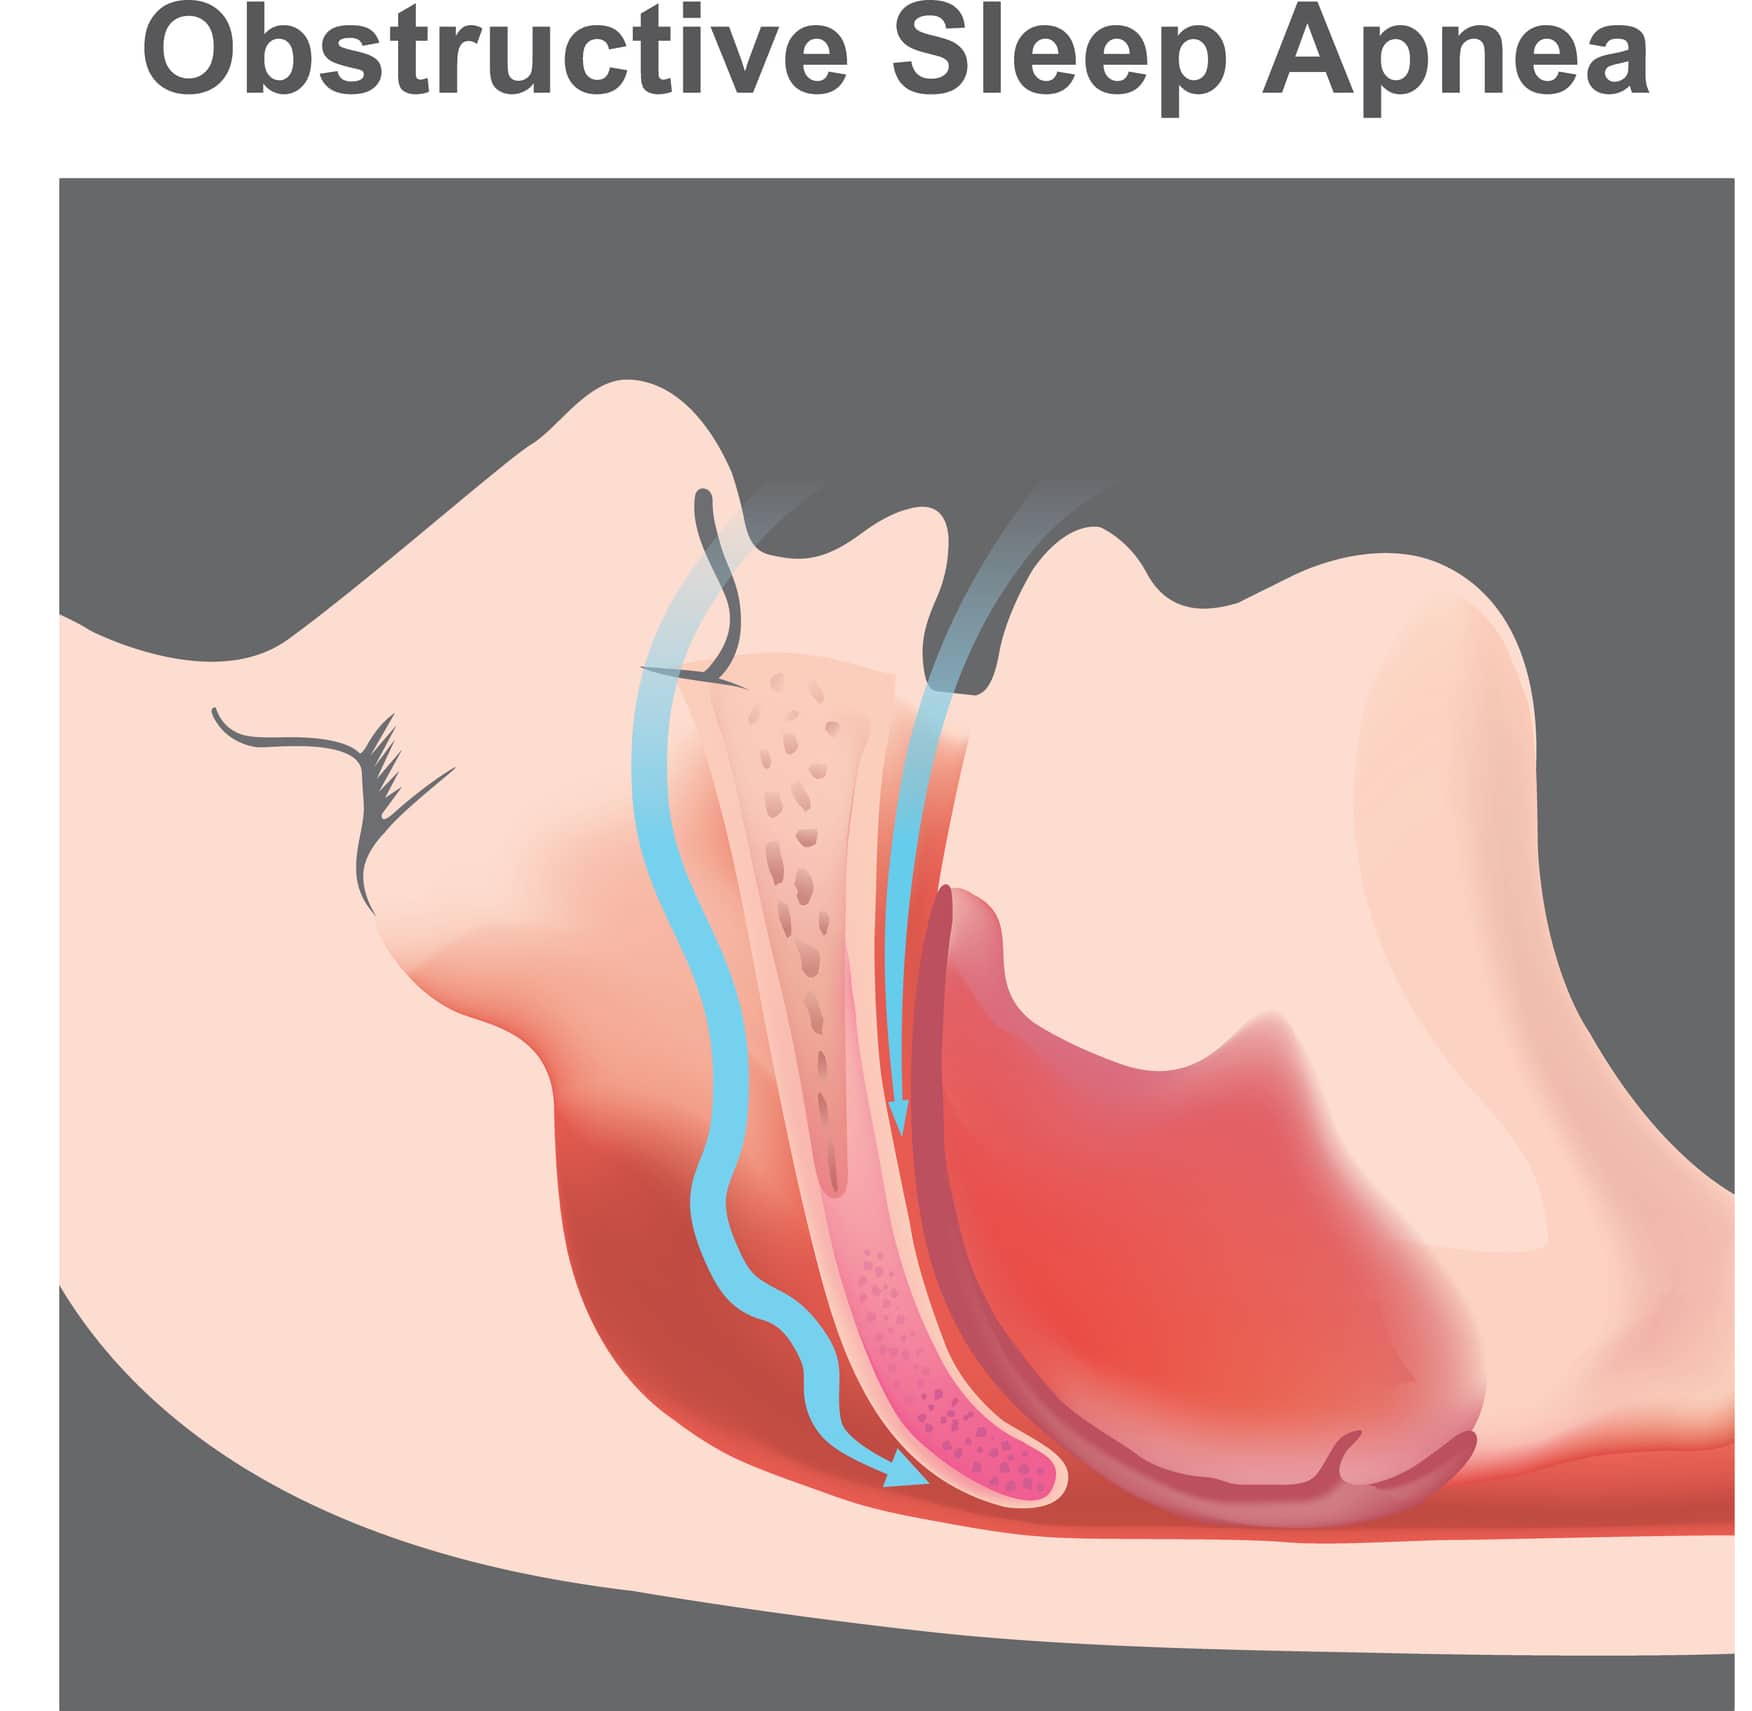 Can I get VA 100% for Sleep Apnea?